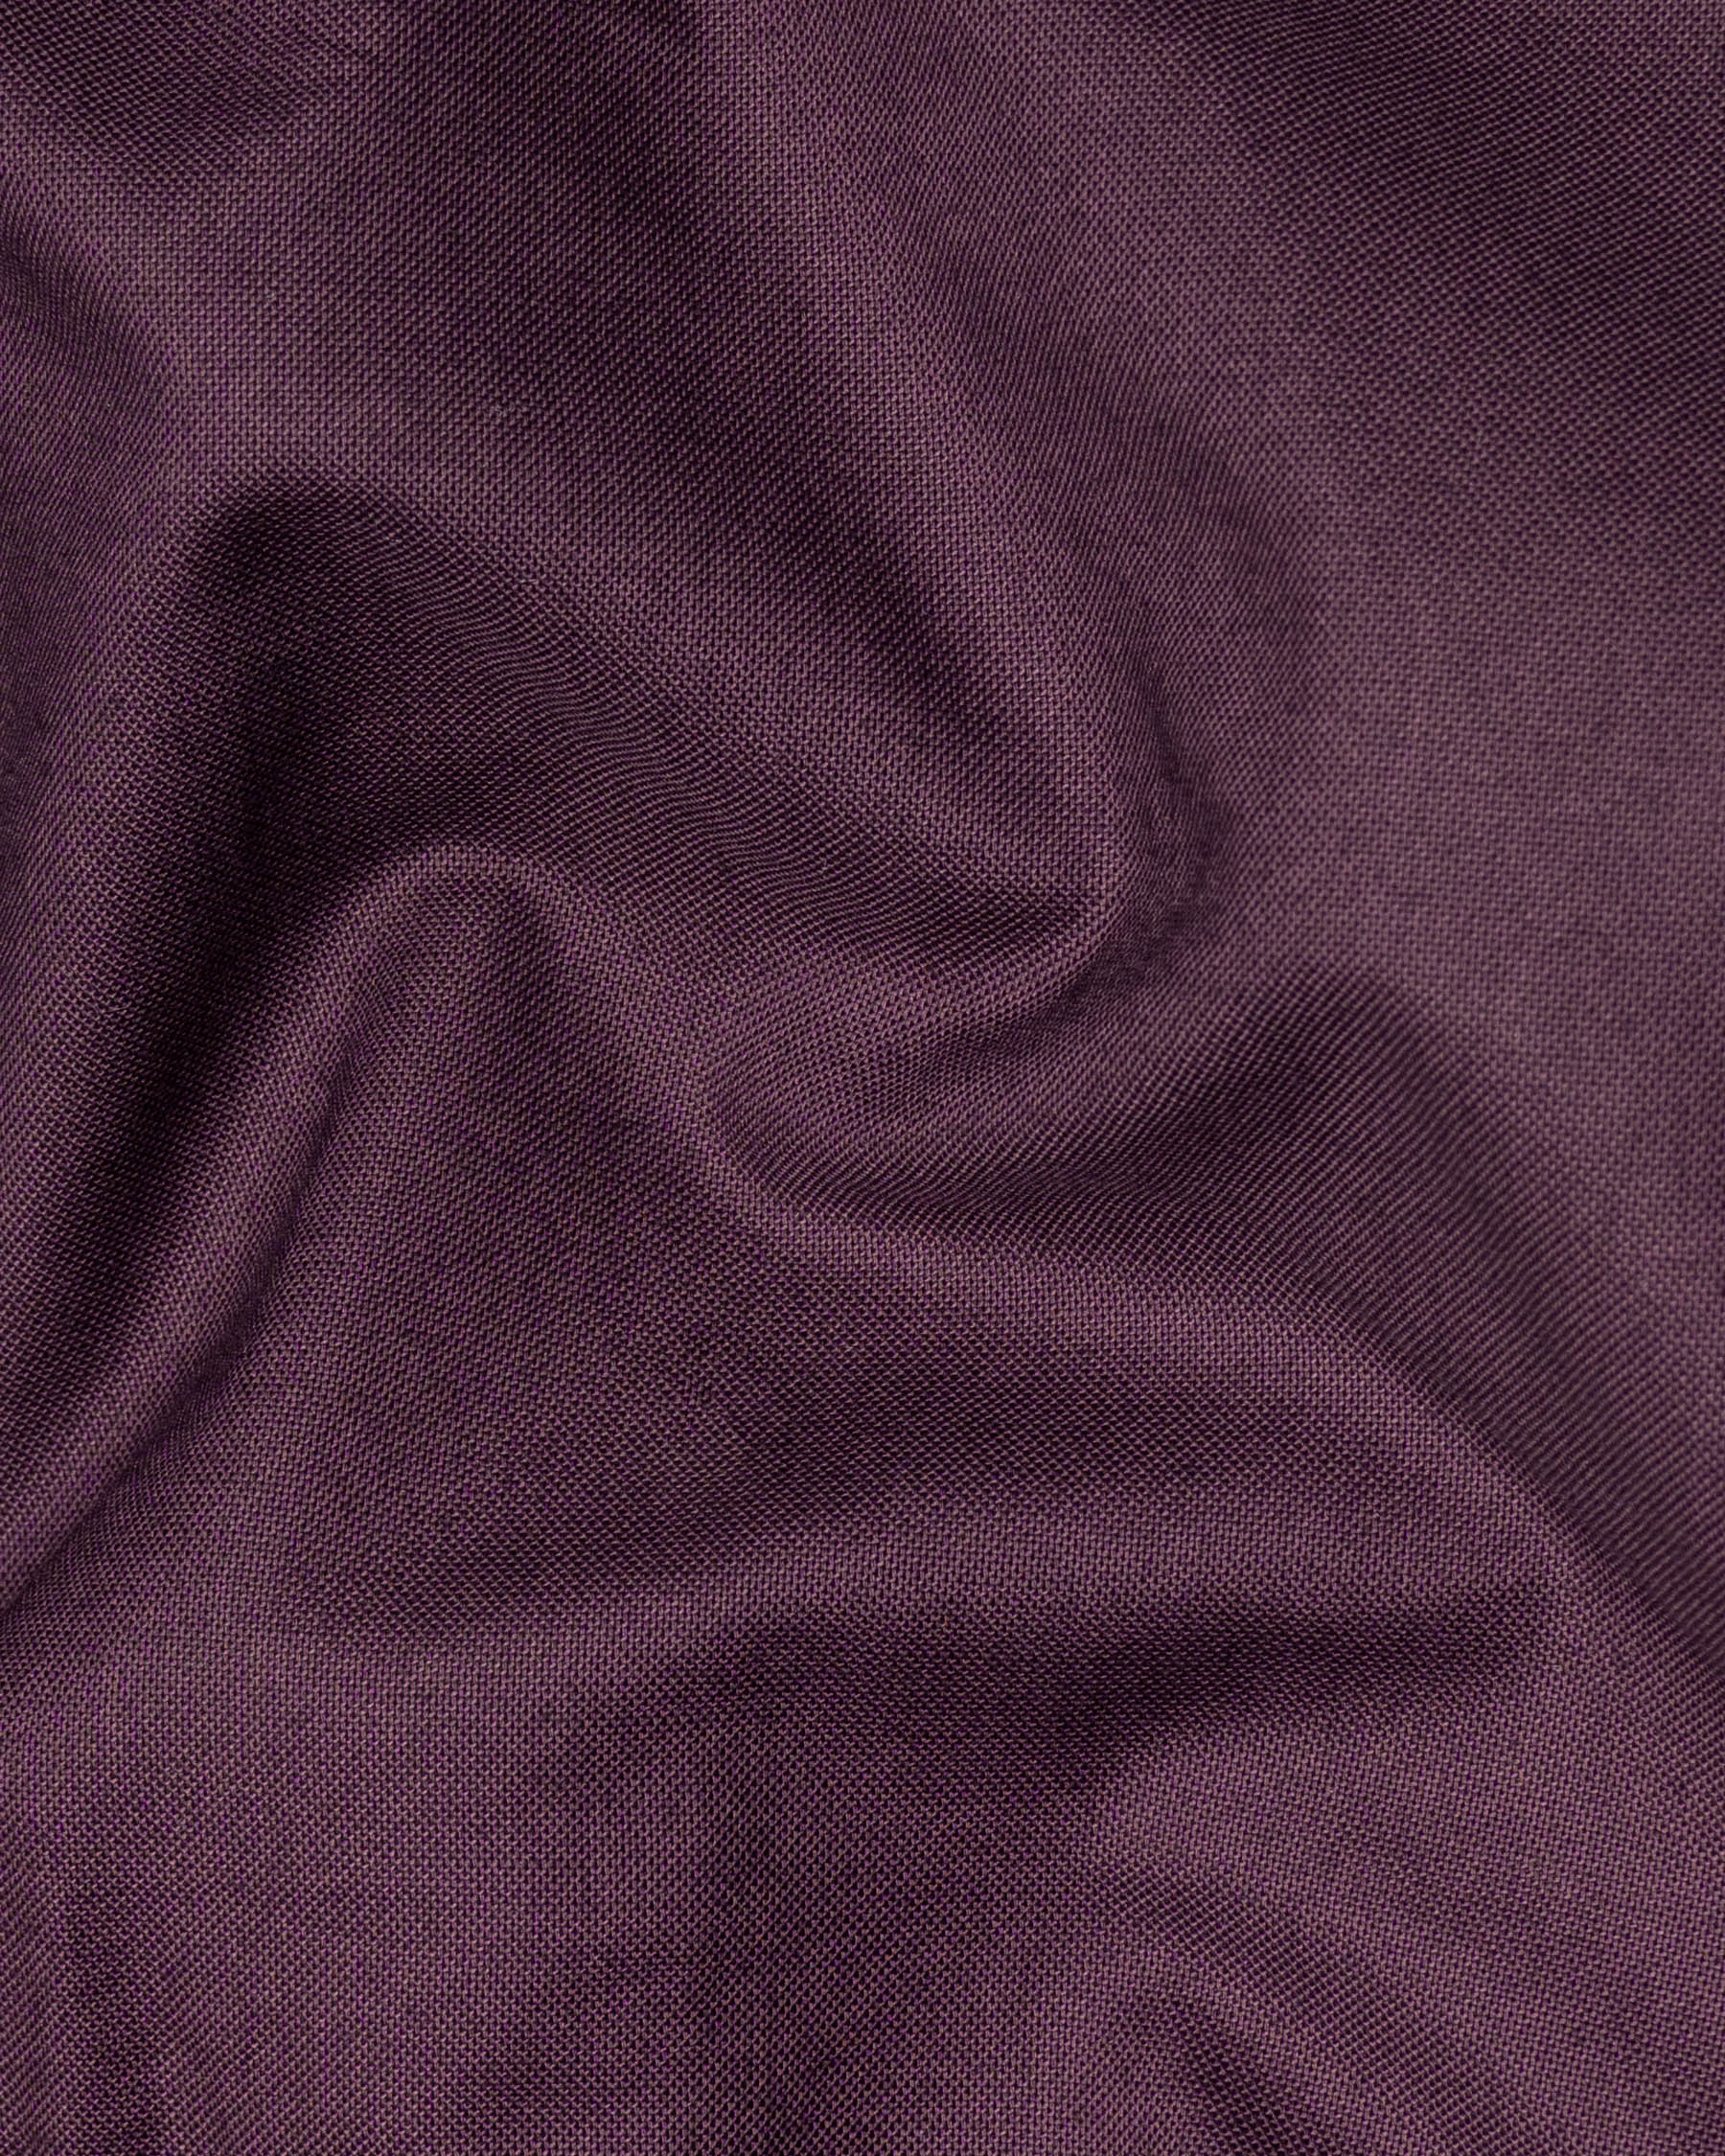 Matterhorn Violet Royal Oxford Shirt 6305-BD-BLK-38, 6305-BD-BLK-H-38, 6305-BD-BLK-39, 6305-BD-BLK-H-39, 6305-BD-BLK-40, 6305-BD-BLK-H-40, 6305-BD-BLK-42, 6305-BD-BLK-H-42, 6305-BD-BLK-44, 6305-BD-BLK-H-44, 6305-BD-BLK-46, 6305-BD-BLK-H-46, 6305-BD-BLK-48, 6305-BD-BLK-H-48, 6305-BD-BLK-50, 6305-BD-BLK-H-50, 6305-BD-BLK-52, 6305-BD-BLK-H-52